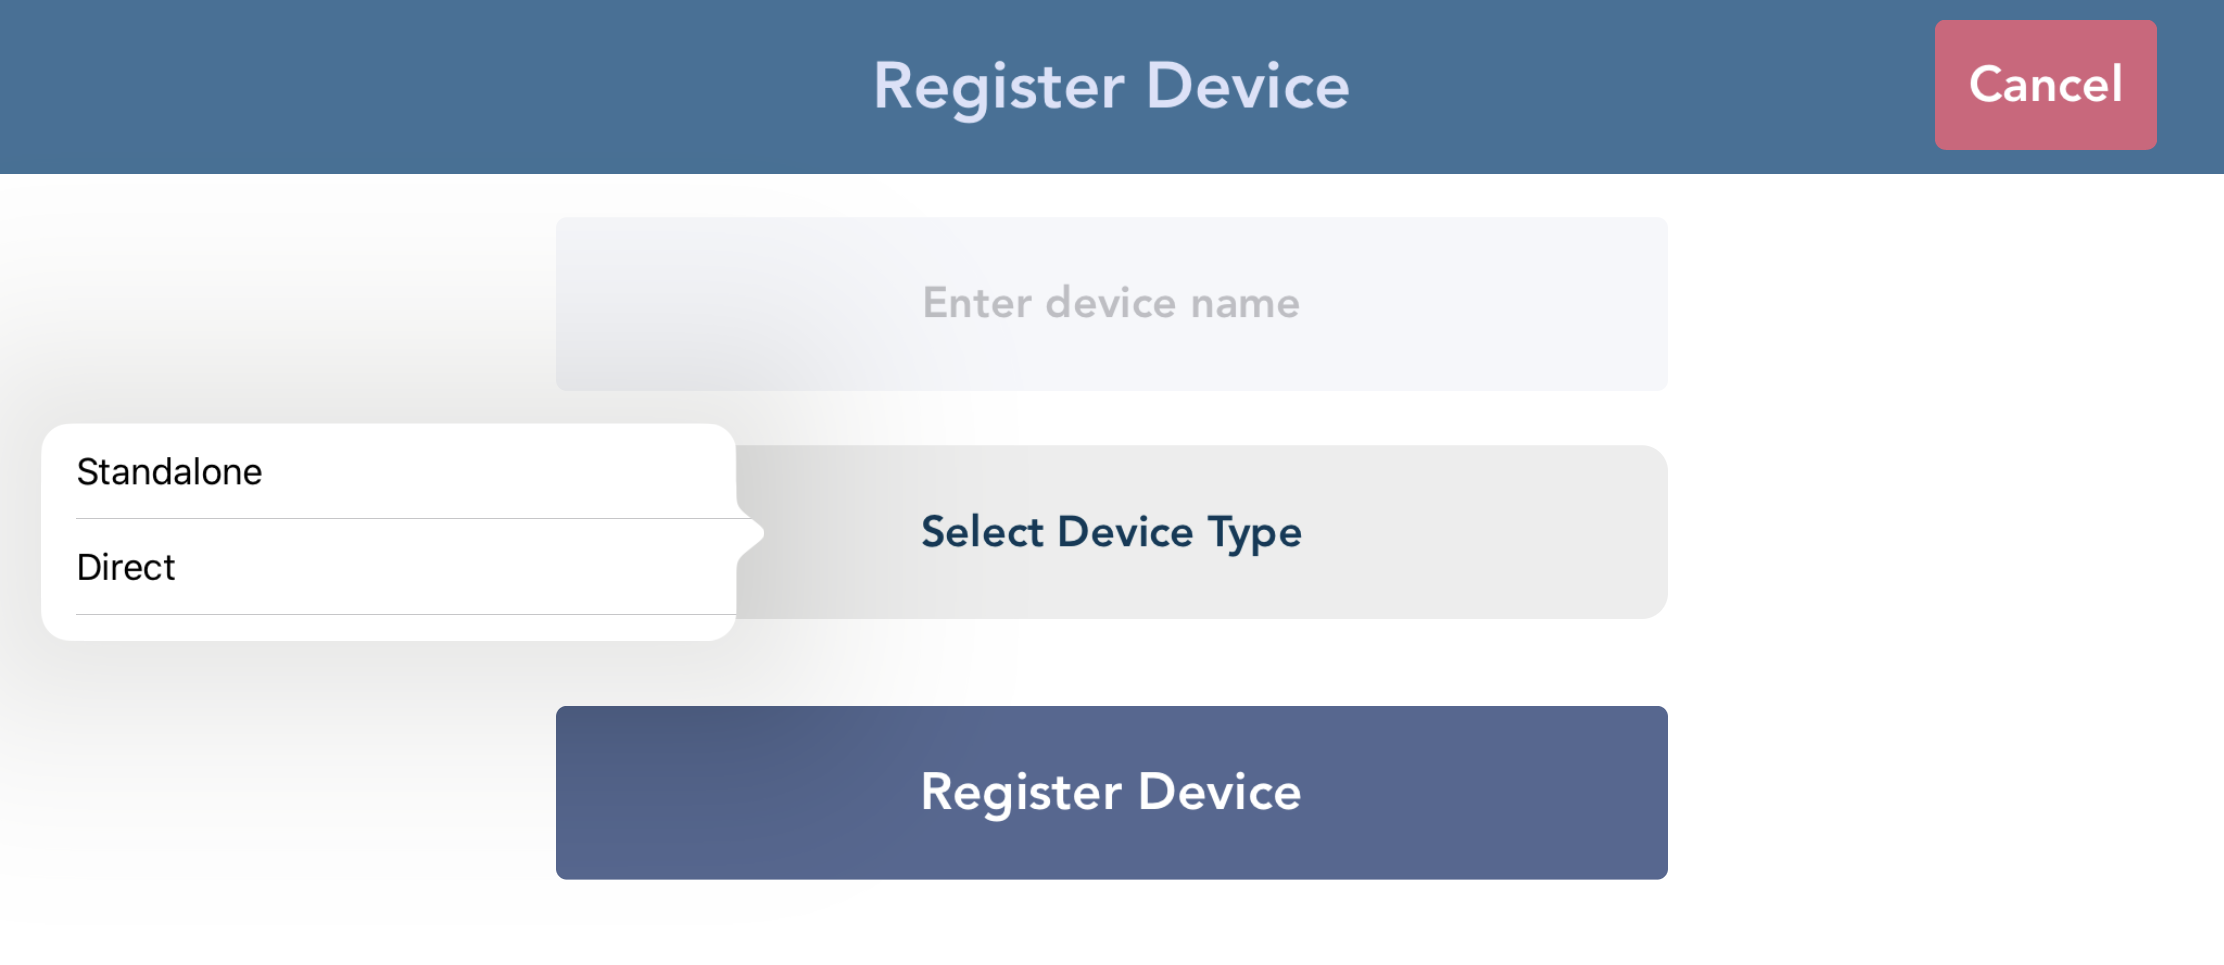 Register Device Screen